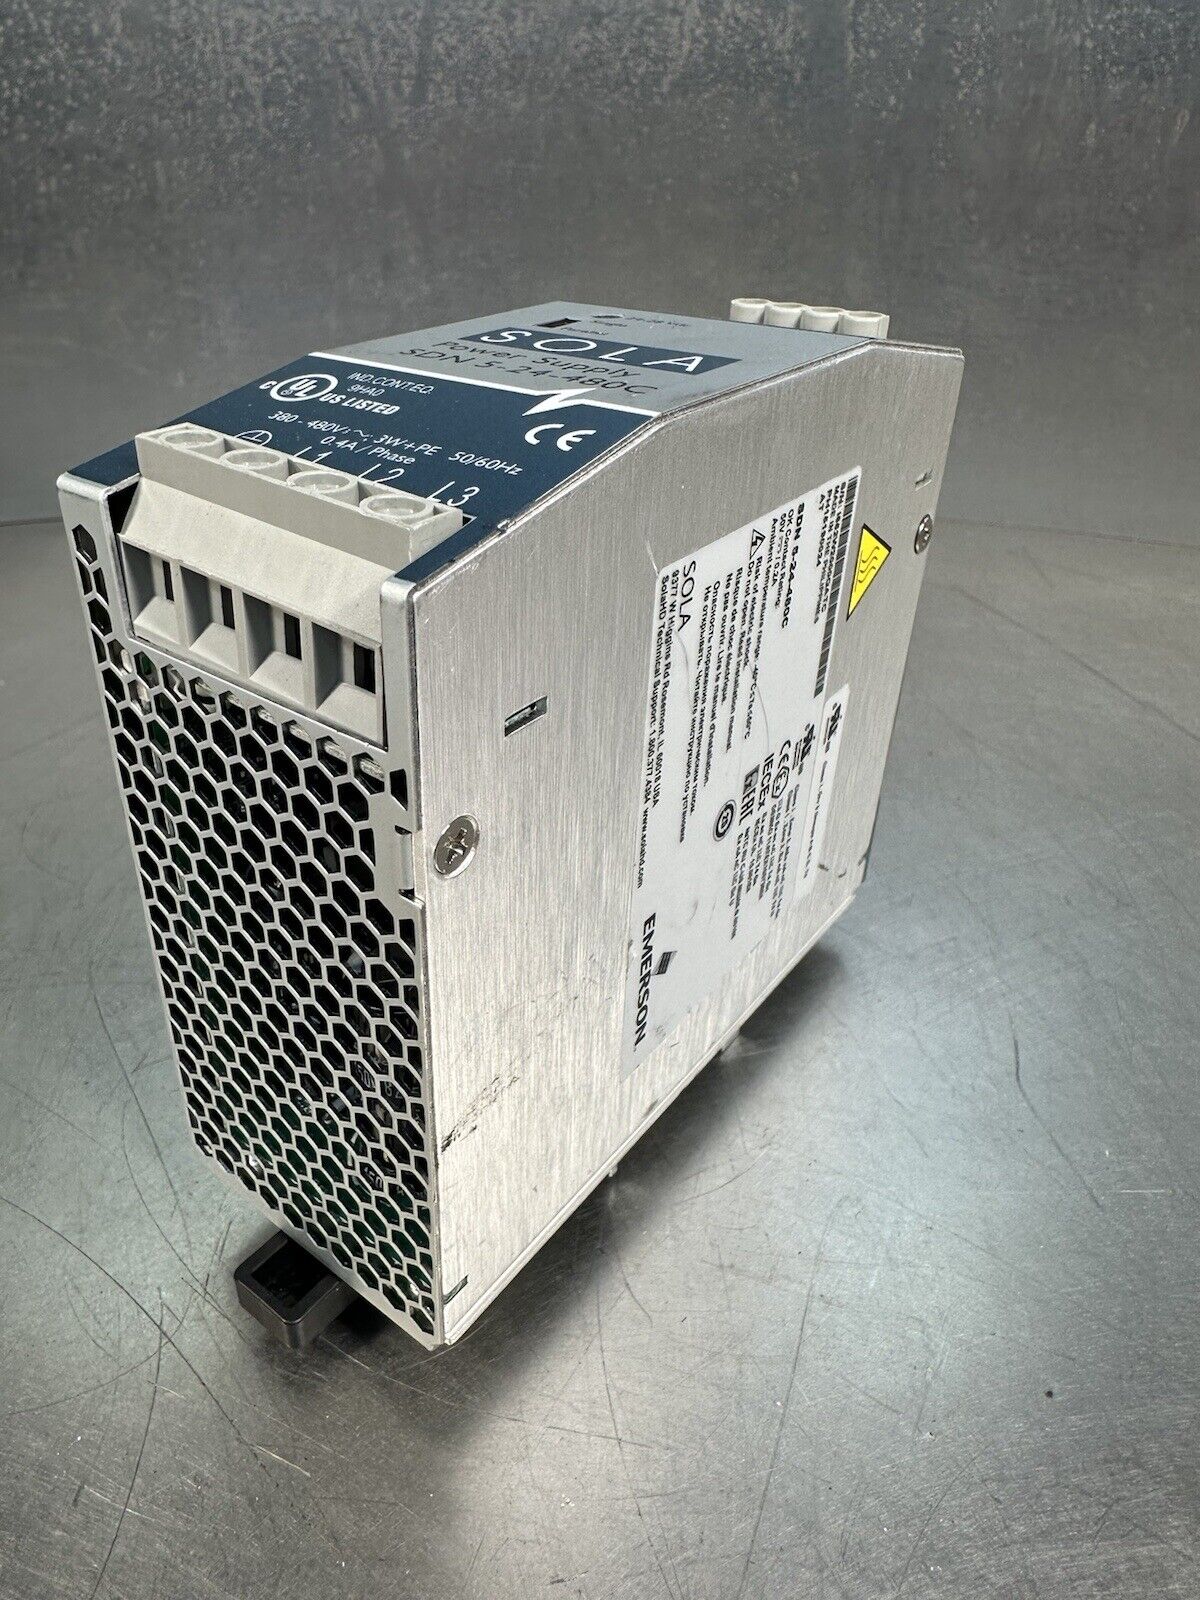 Emerson Industrial Automation Sola SDN 10-24-480C Power Supply (BIN-1.5.3)